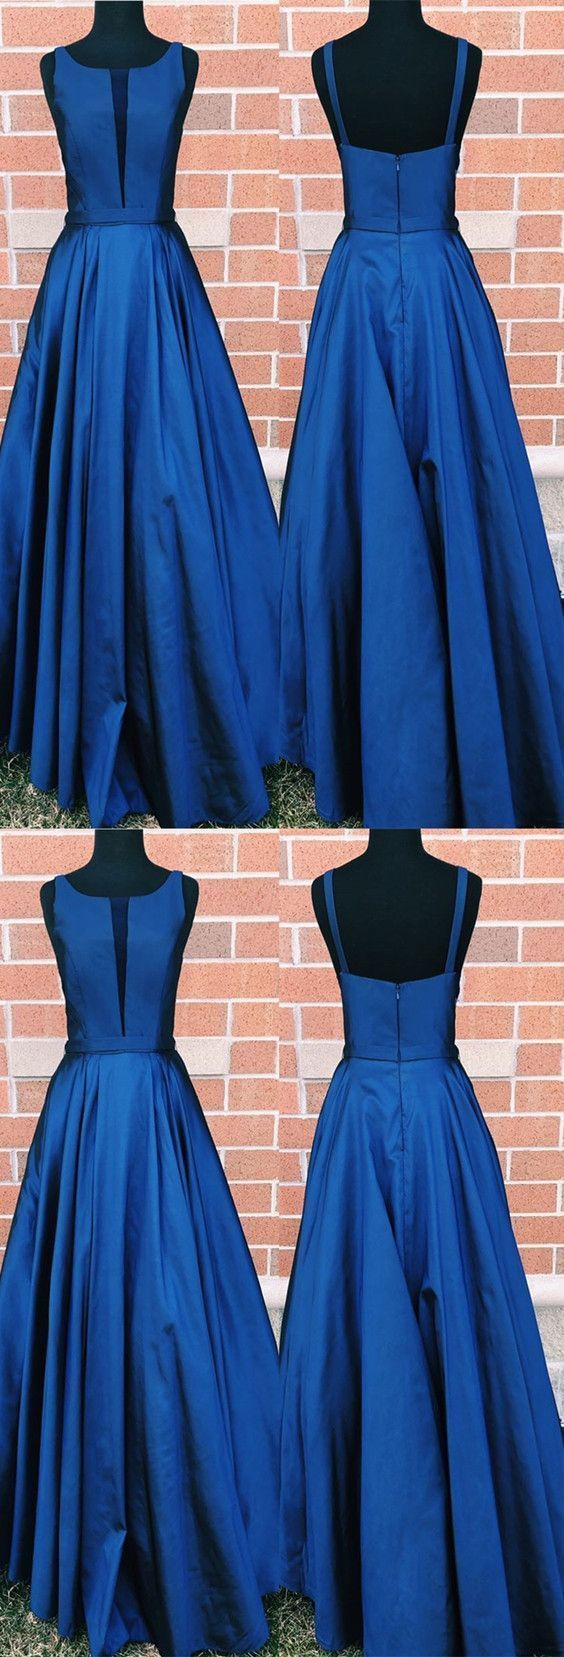 Blue Long Satin Scoop Neck Prom Dress Floor Length Evening Gowns M8909